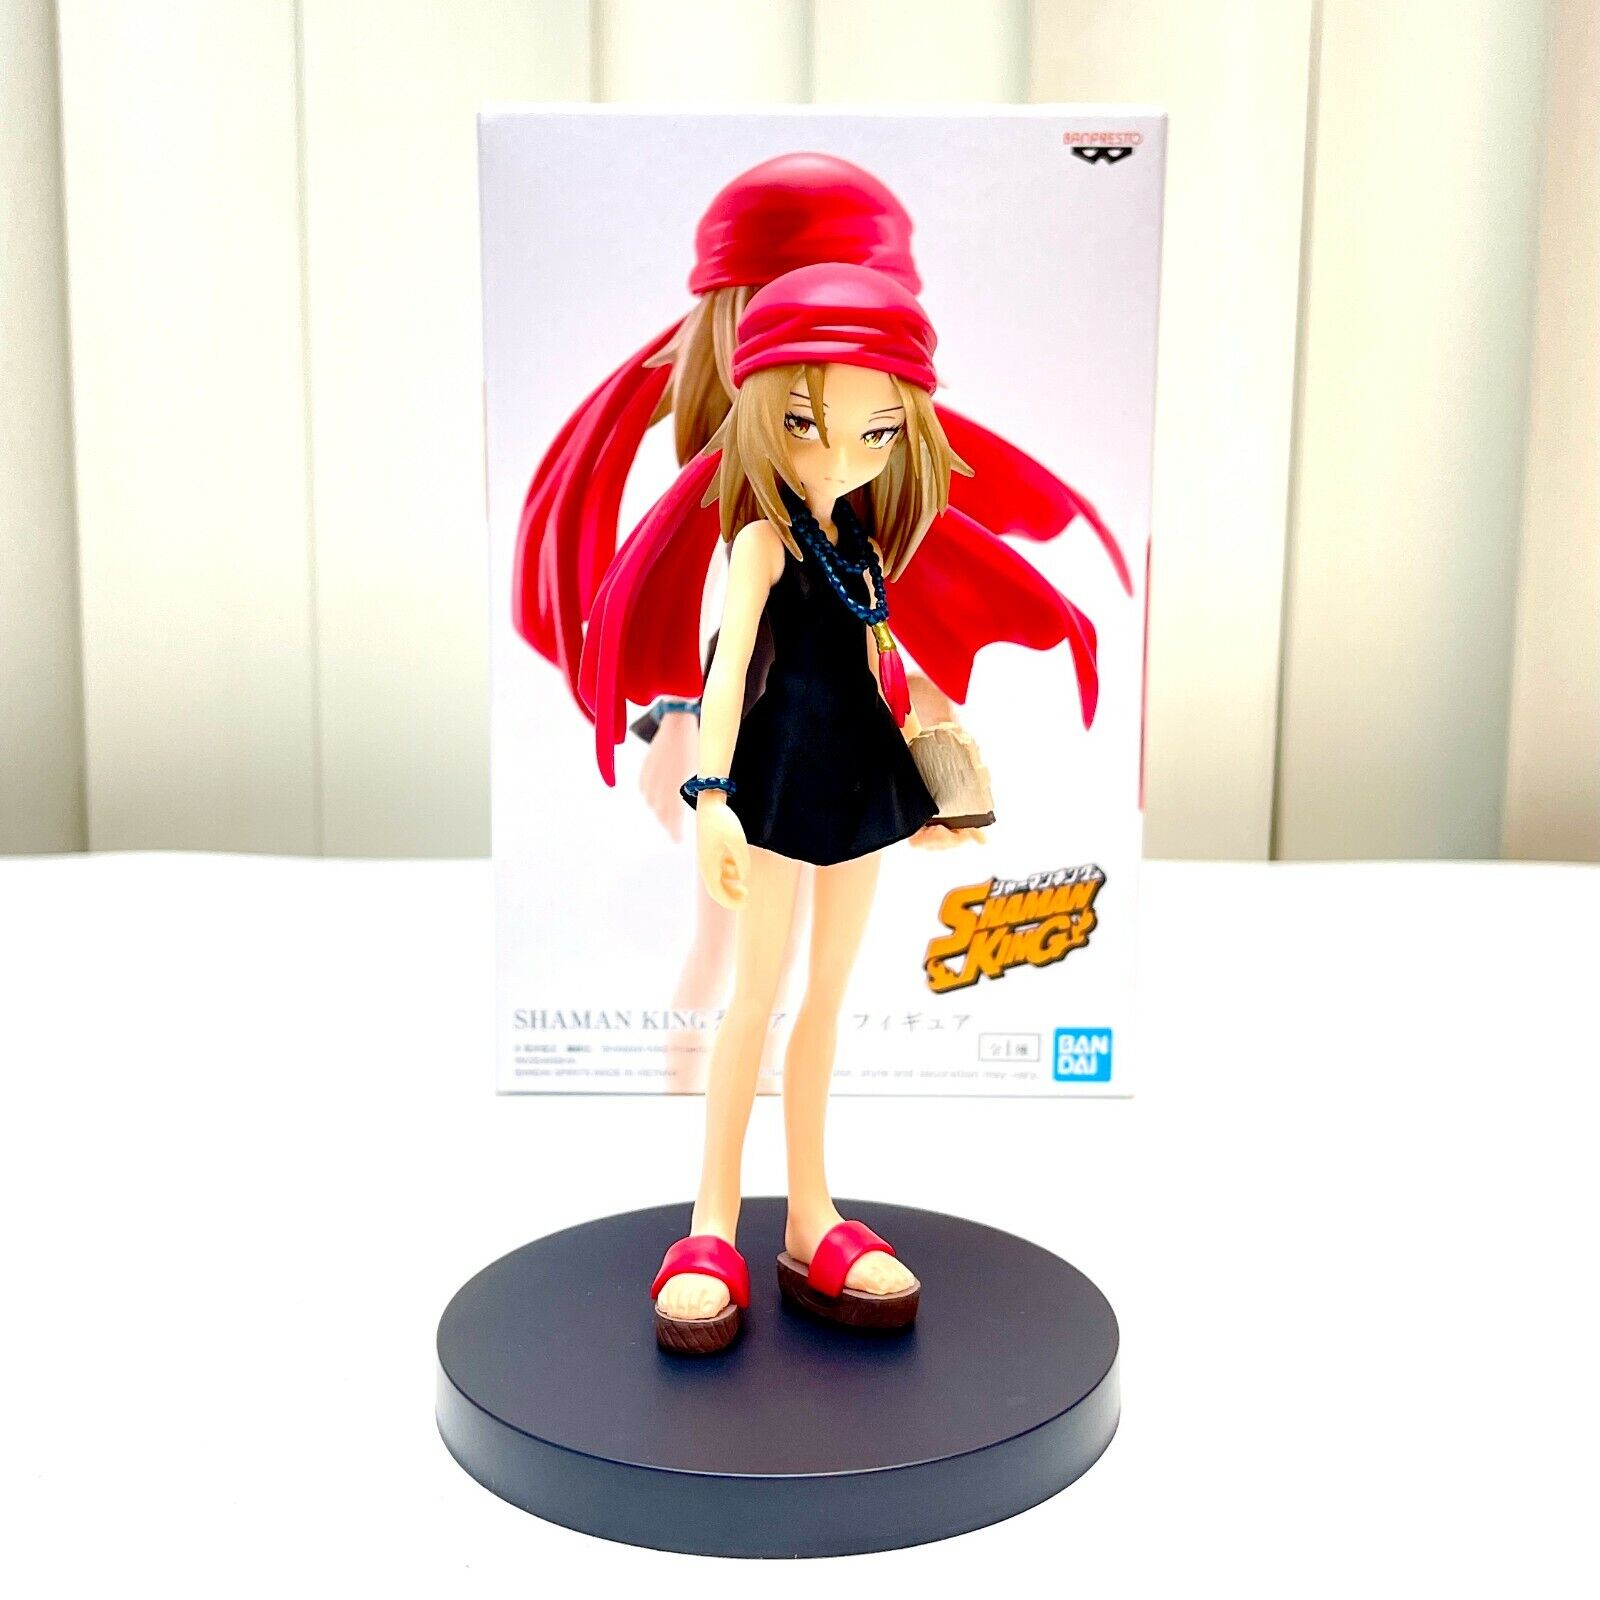 Banpresto Shaman King Anime Figure Statue Toy Anna Kyoyama BP17828